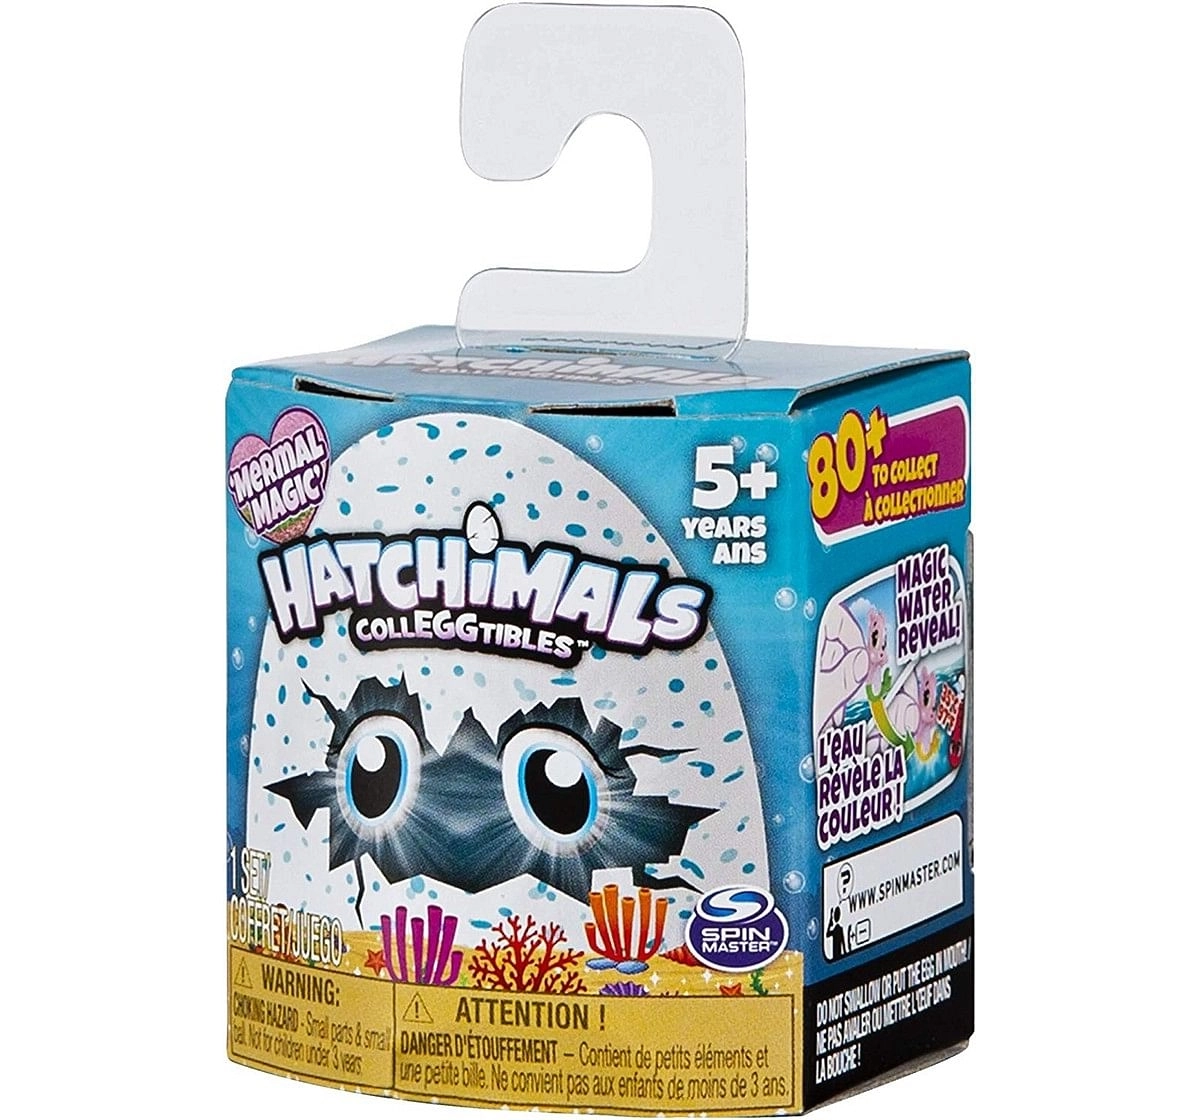 Hatchimals Colleggtibles S5 1 Pack Novelty for Kids age 3Y+ - 4.7752 Cm 